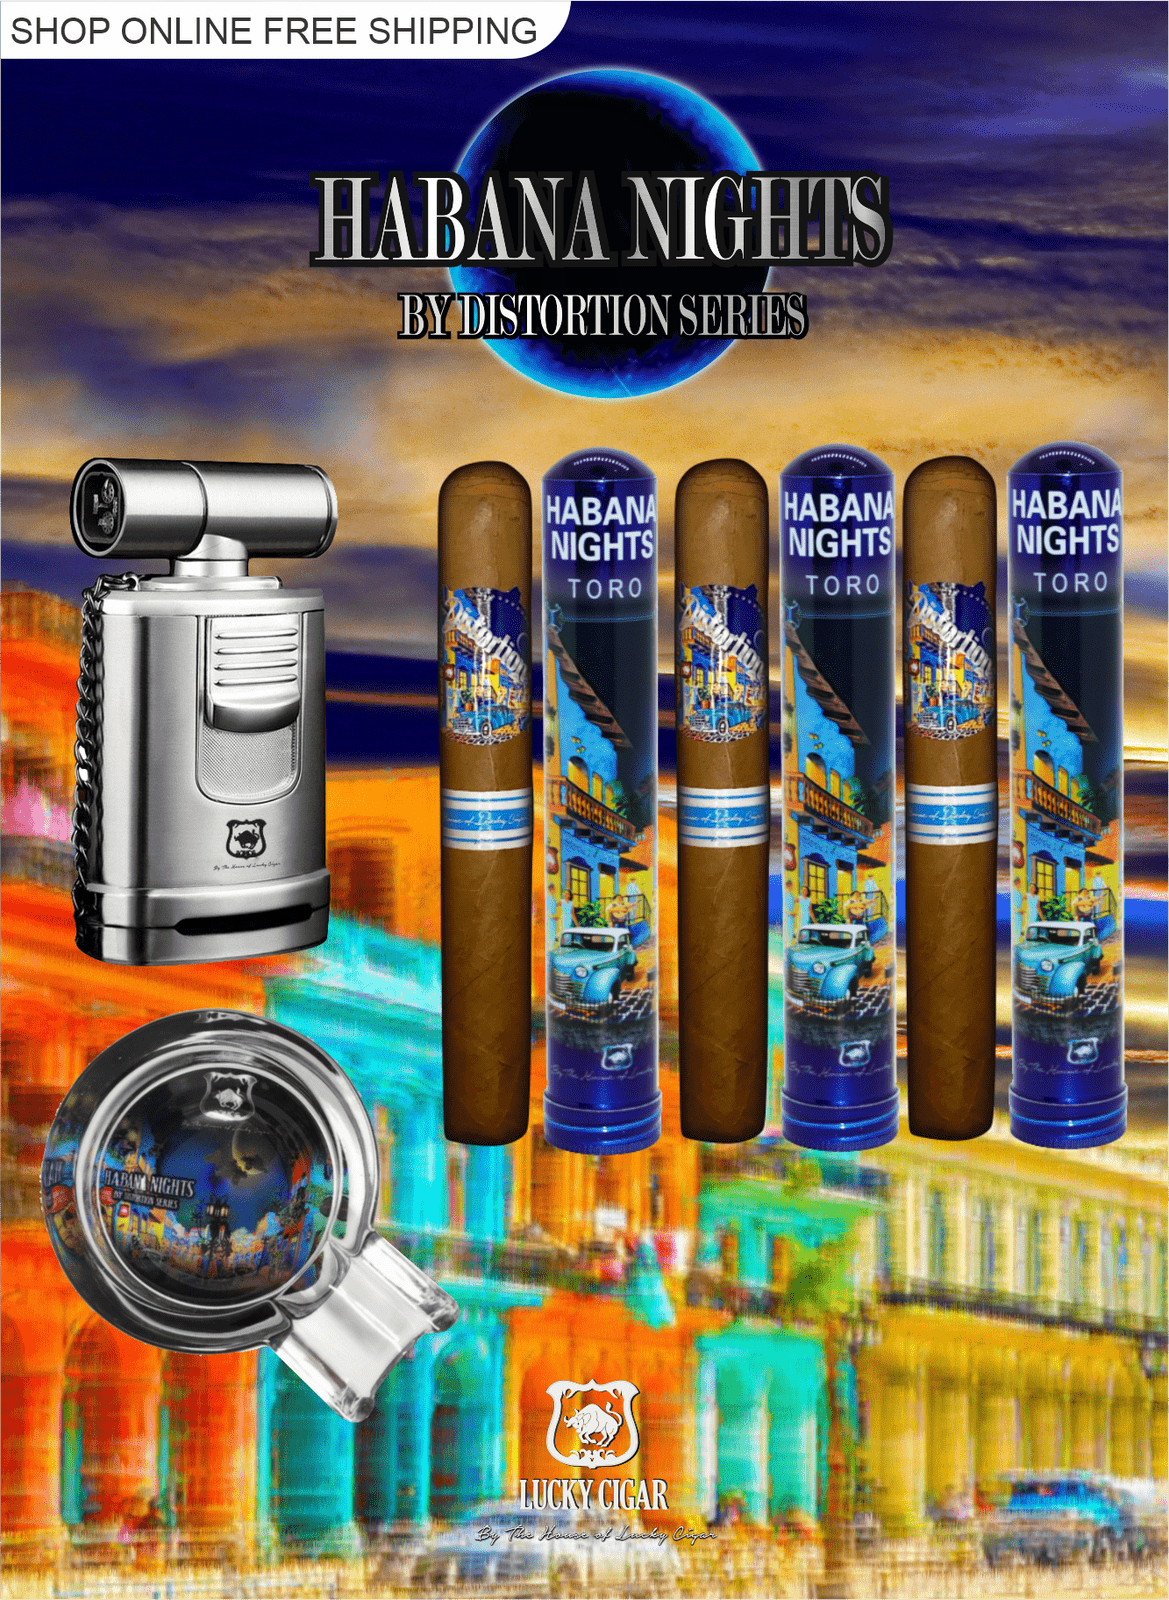 Habana Nights 6x50 Cigar From The Distortion Series: 3 Cigars, Torch, Ashtray